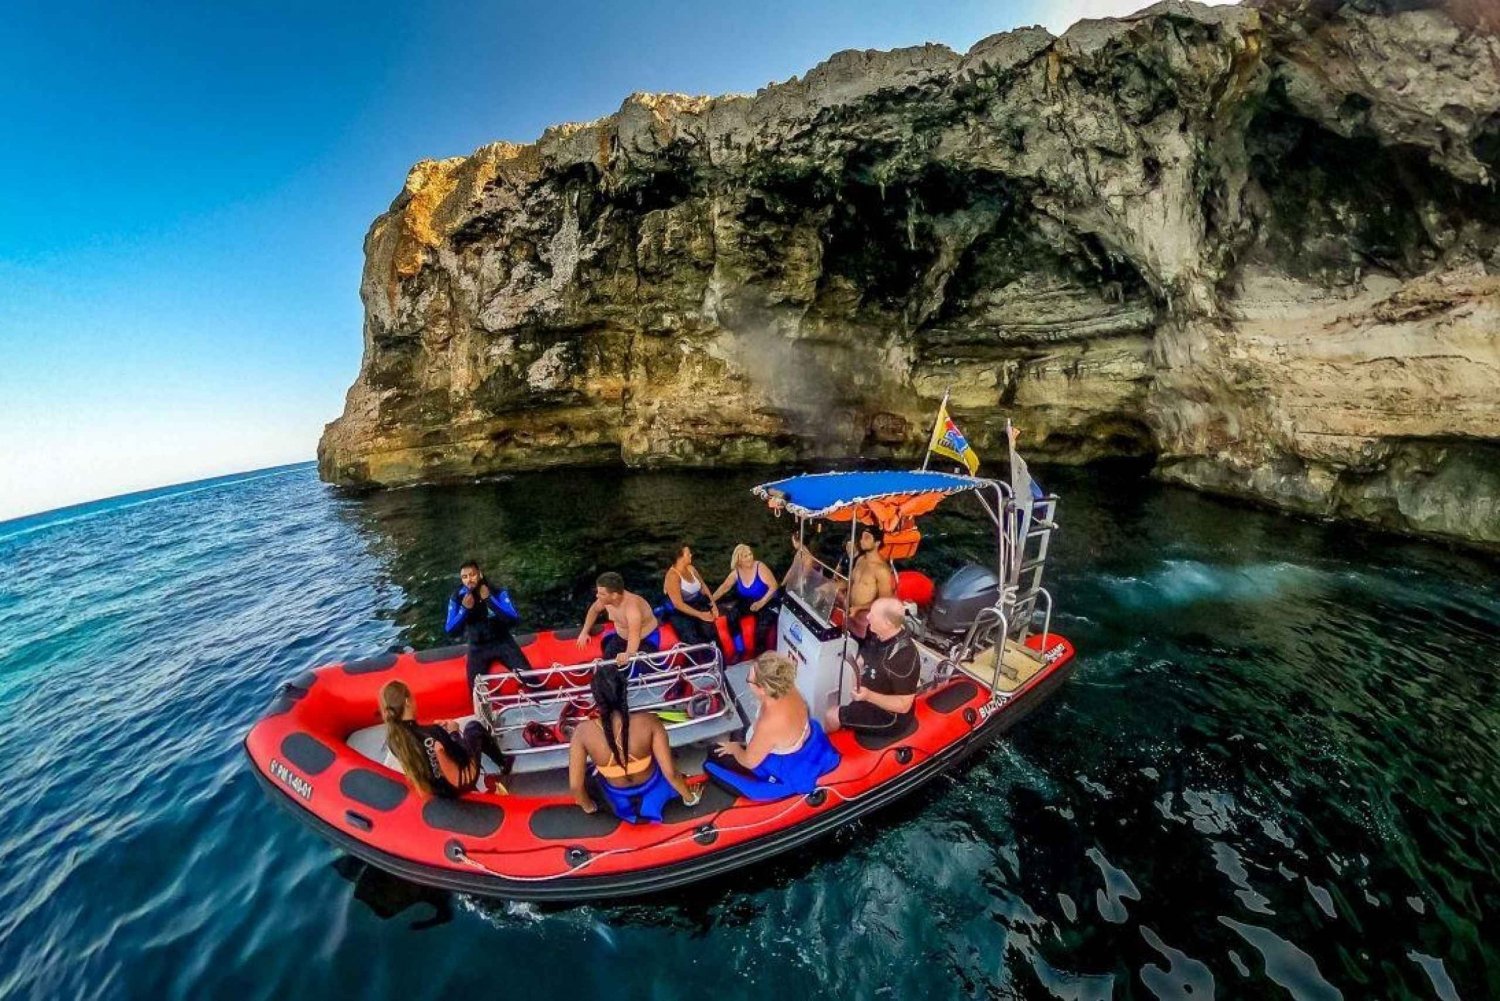 Maiorca: Tour in barca del Parco Naturale con snorkeling